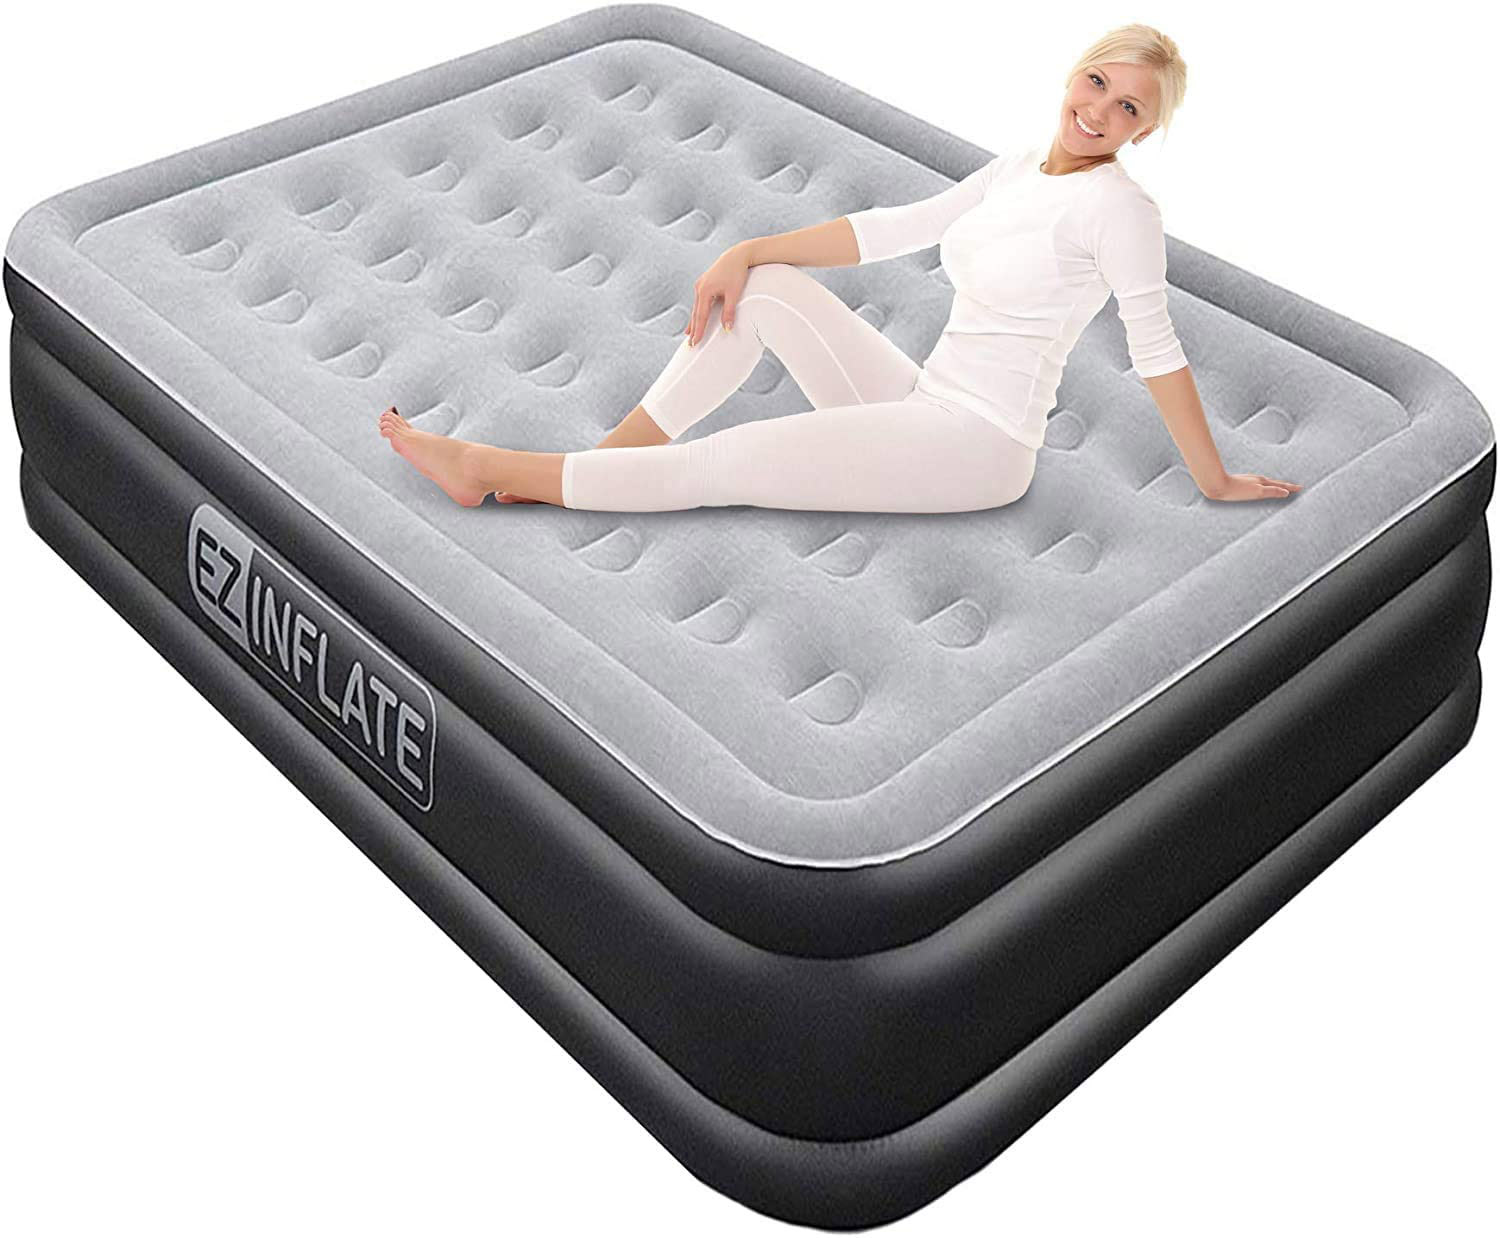 homemade camping air mattress